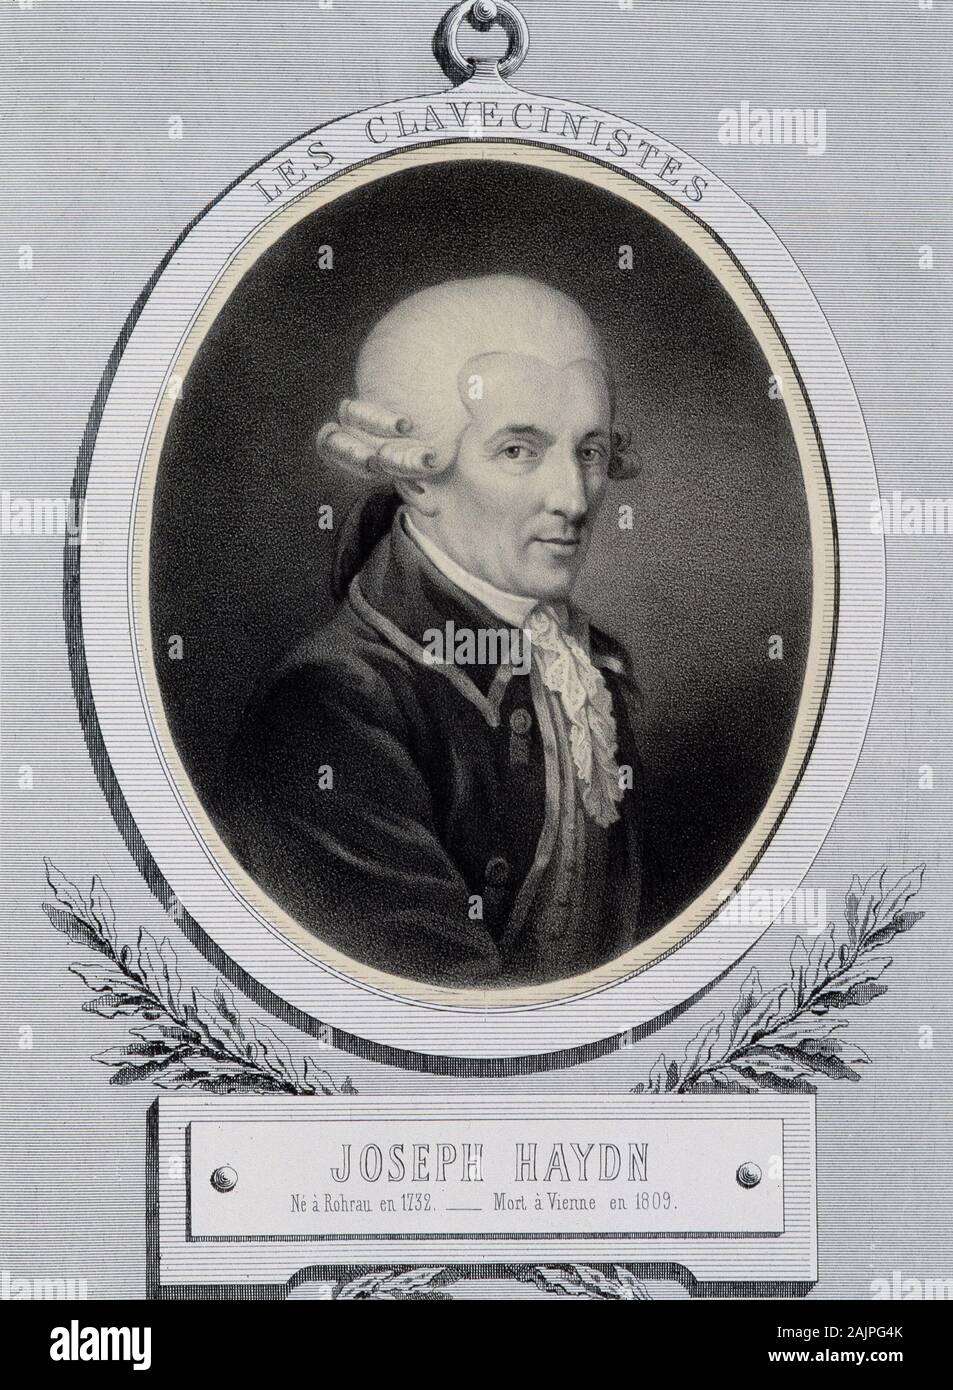 Portrait en medaillon du musicien Franz Joseph Haydn (1732-1809) Stock Photo